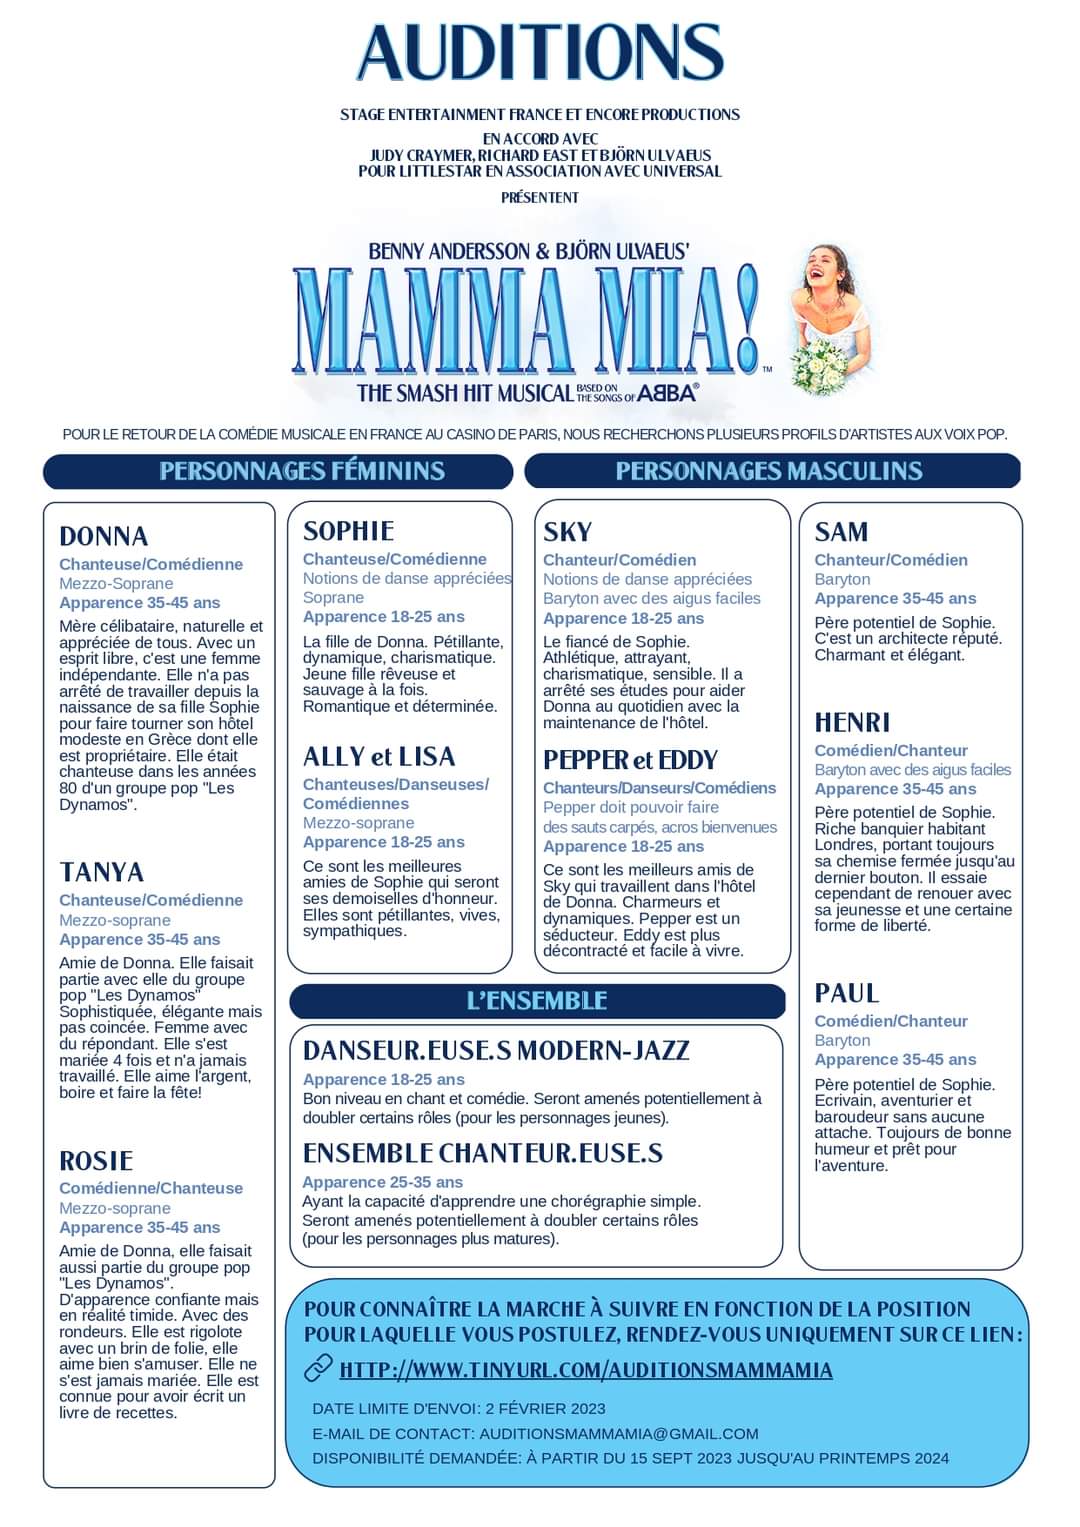 Mamma Mia - Auditions